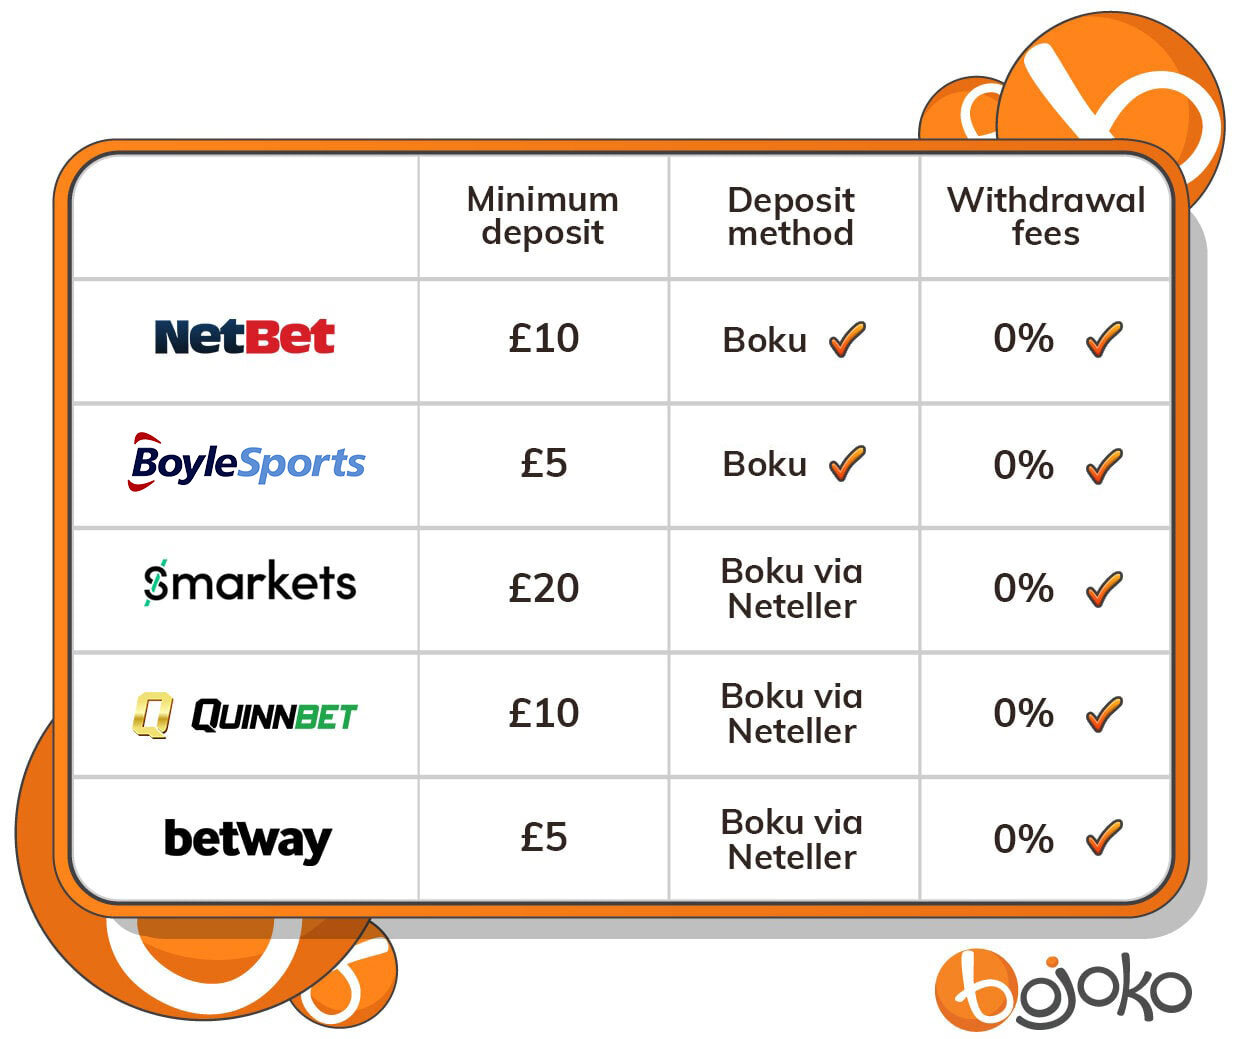 Boku bookmaker comparison table